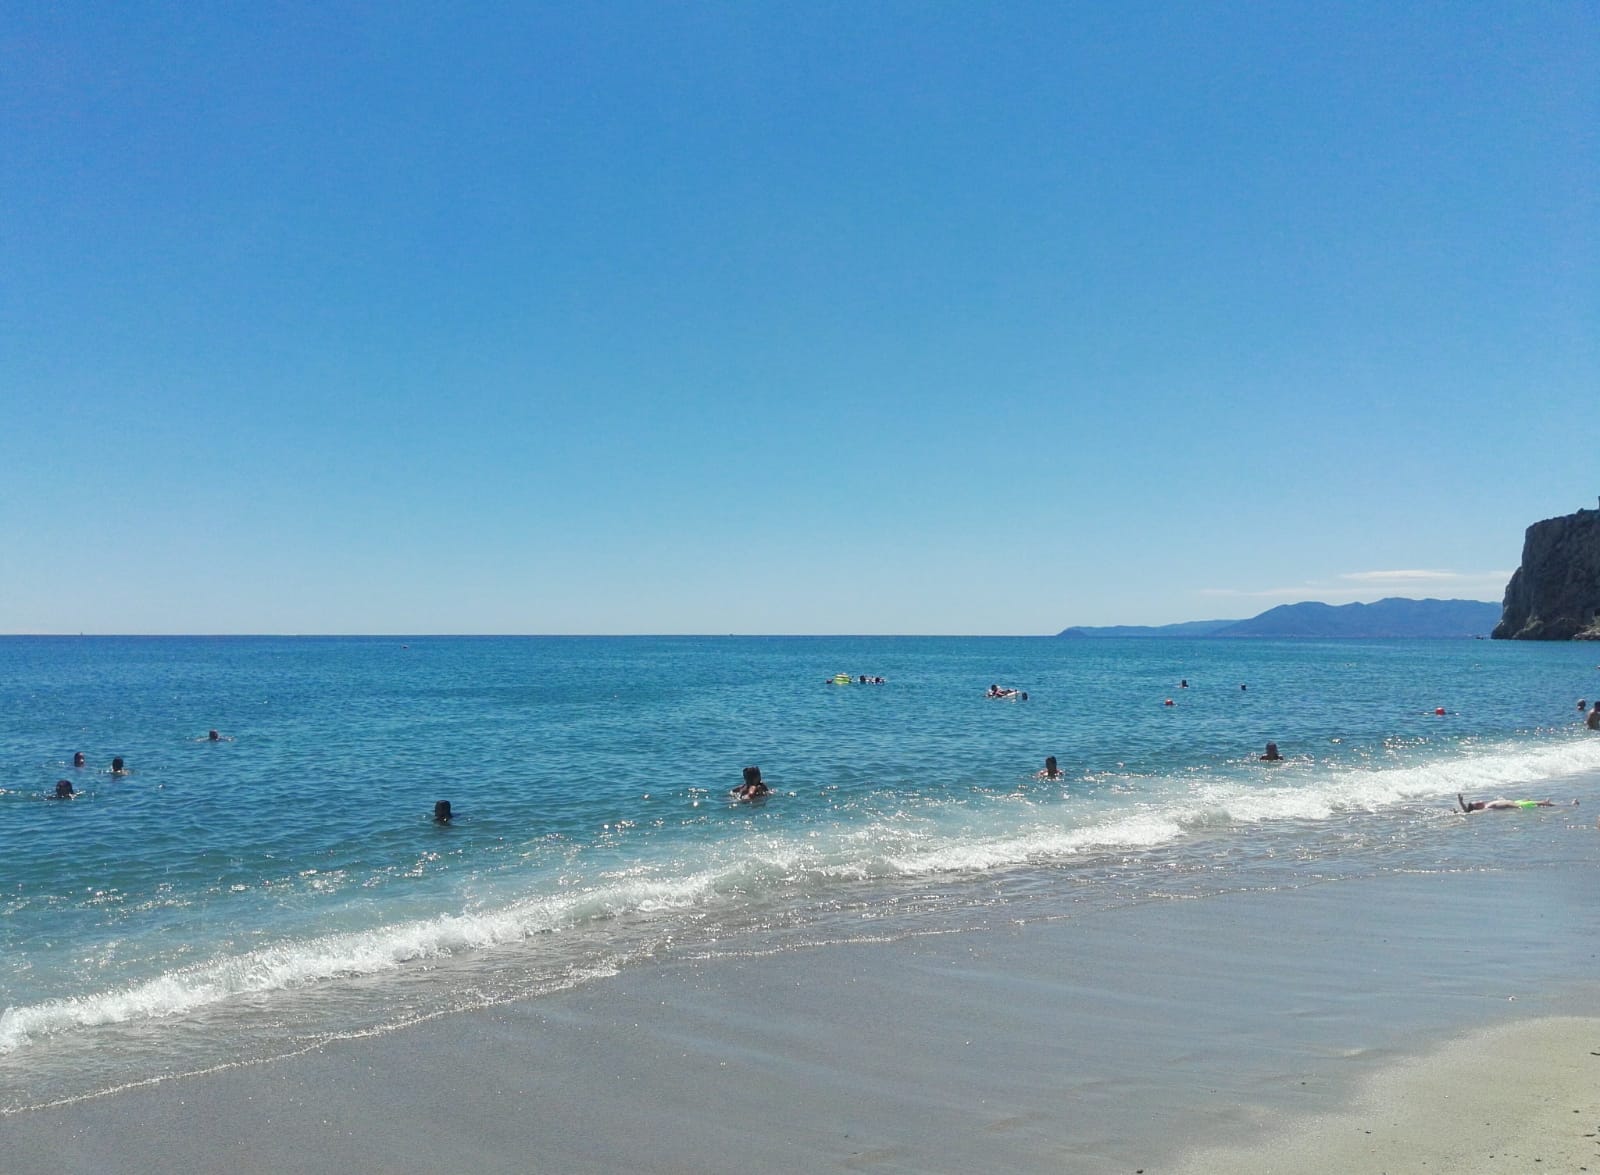 Fotografie cu Spiaggia libera Attrezzata cu o suprafață de apa albastra